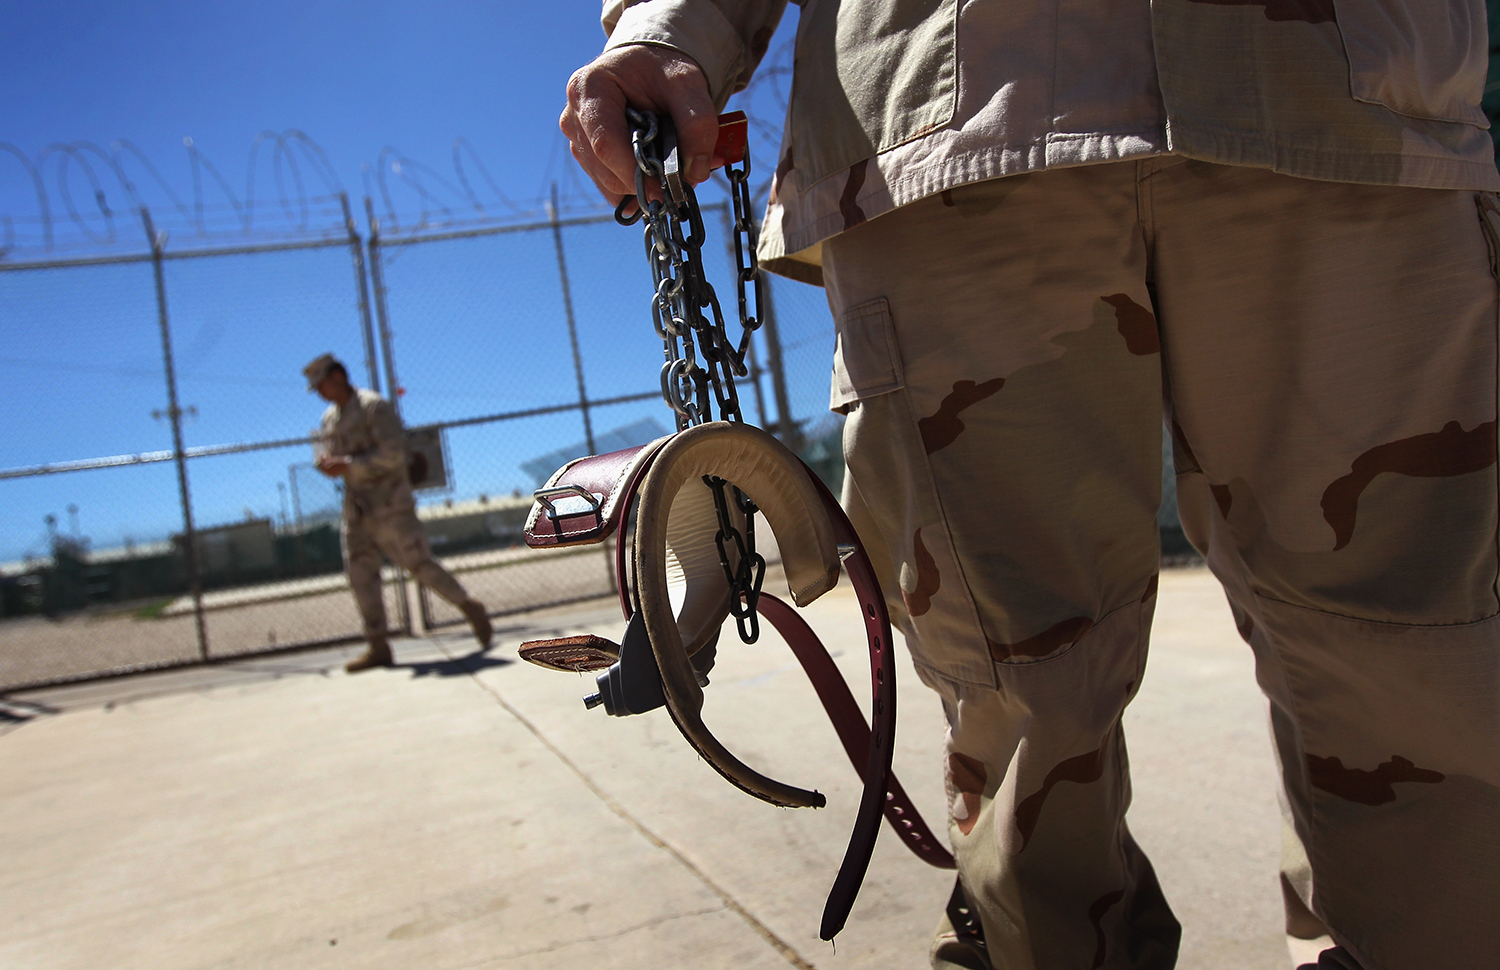 Nine CIA 'Black Sites' Where Detainees Were Tortured - The Intercept